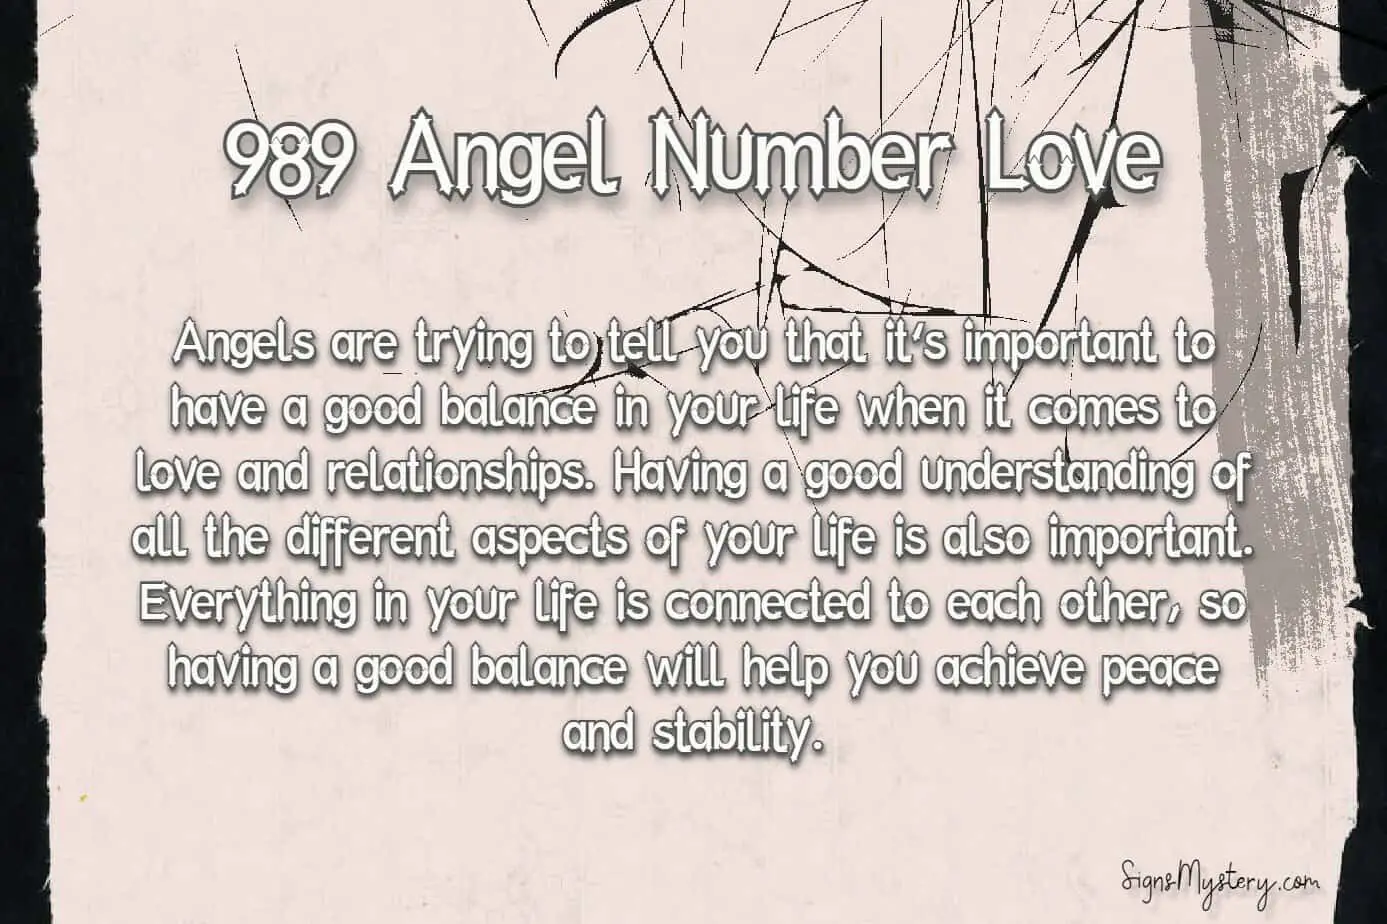 989 angel number love